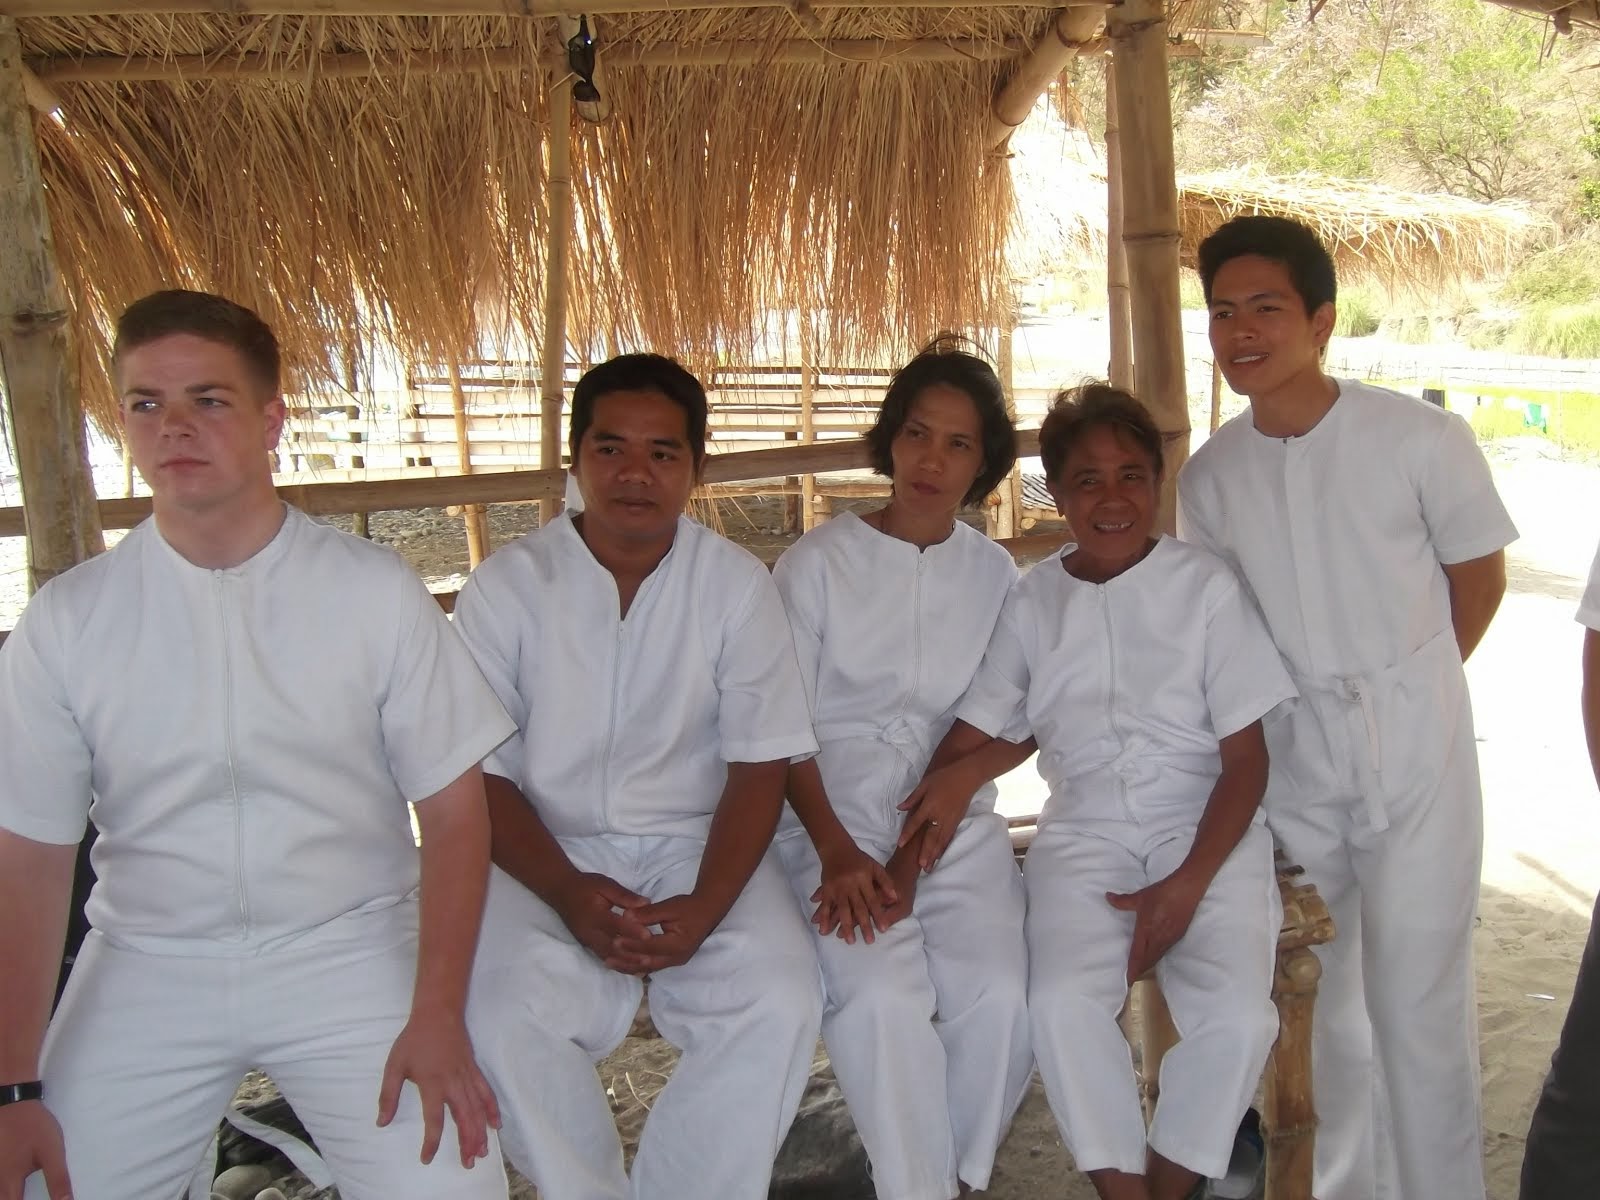 Mac Baptism group